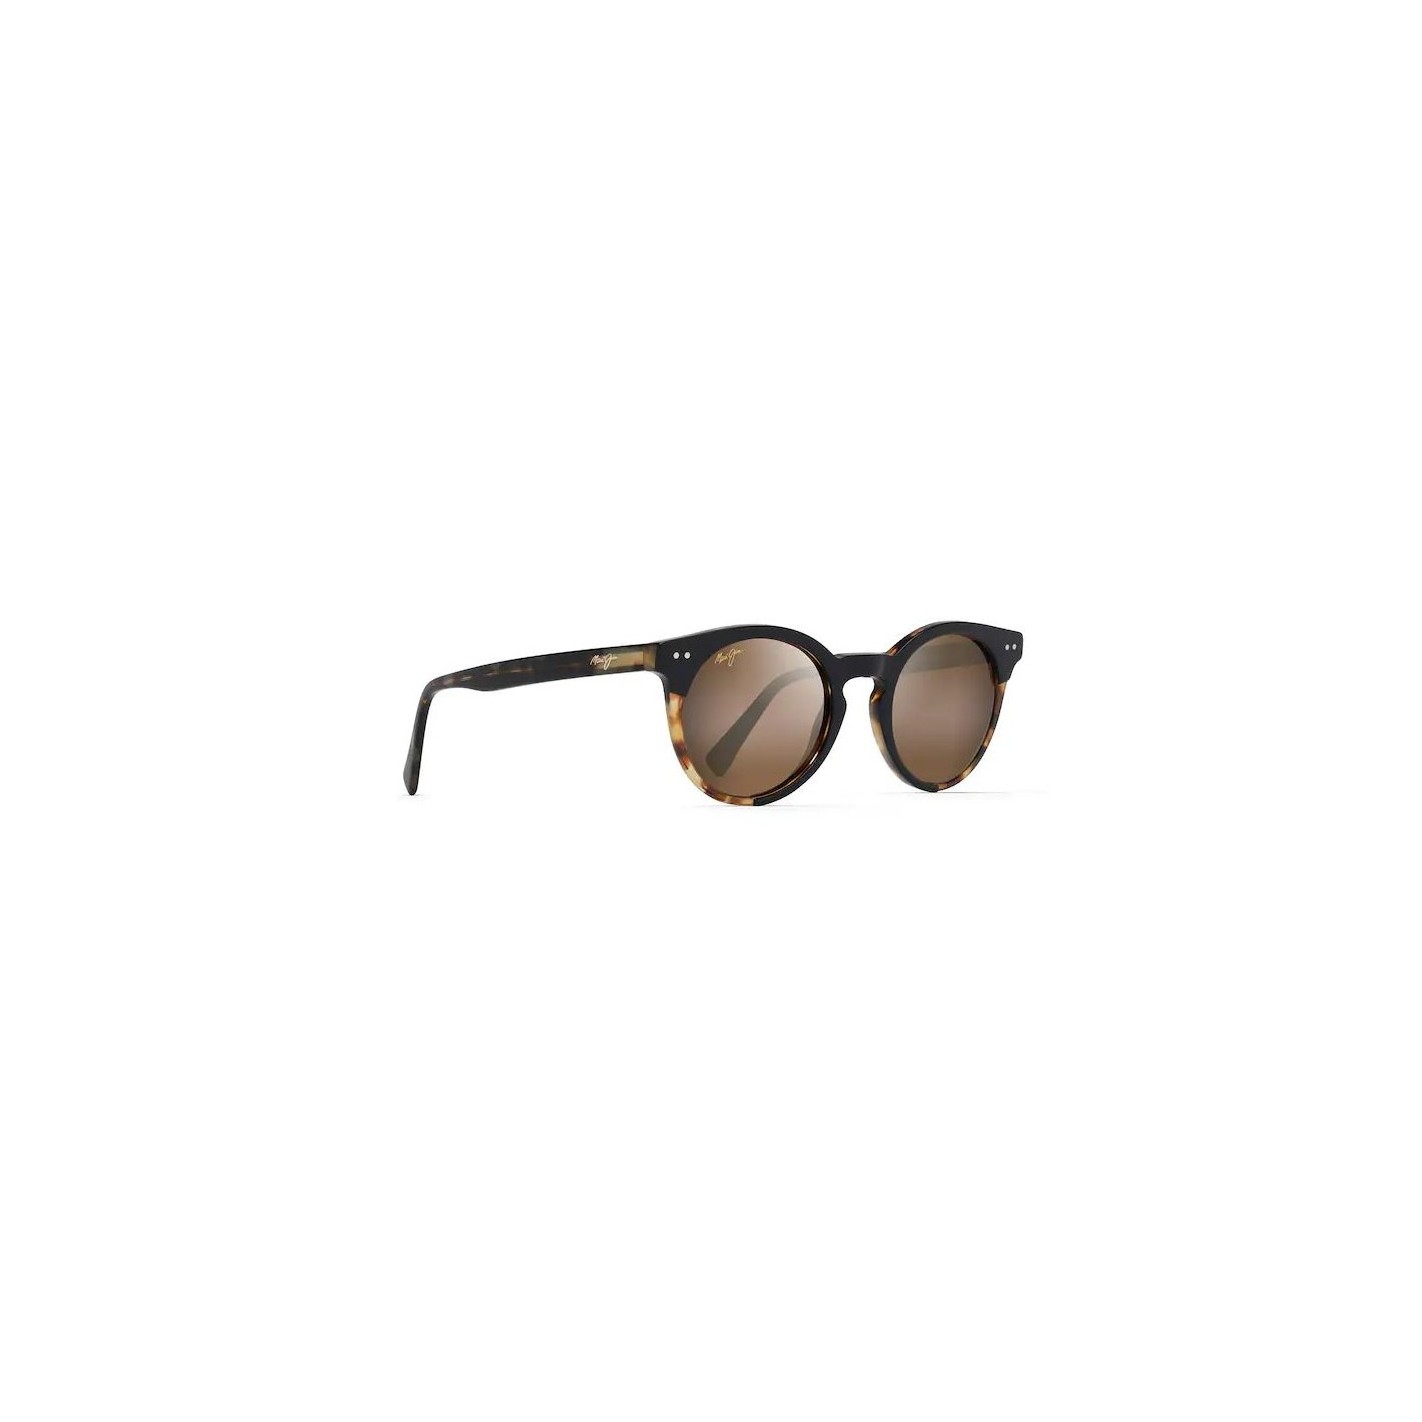 Gafas de Sol Maui Jim H861-10 forma redonda color negro material estilo casual.